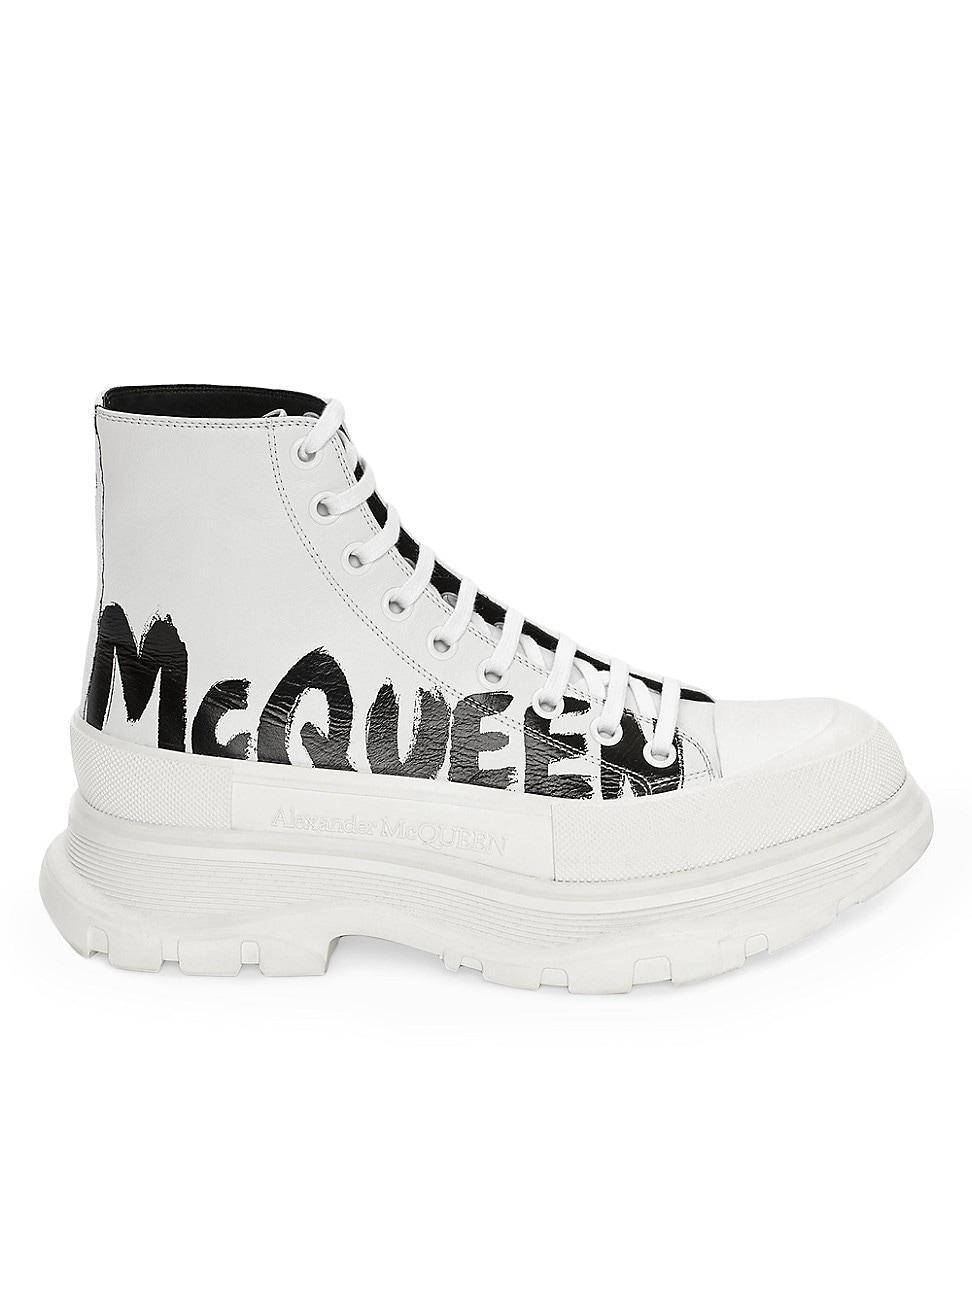 Alexander McQueen Tread Slick Graffiti Logo High Top Sneaker Product Image